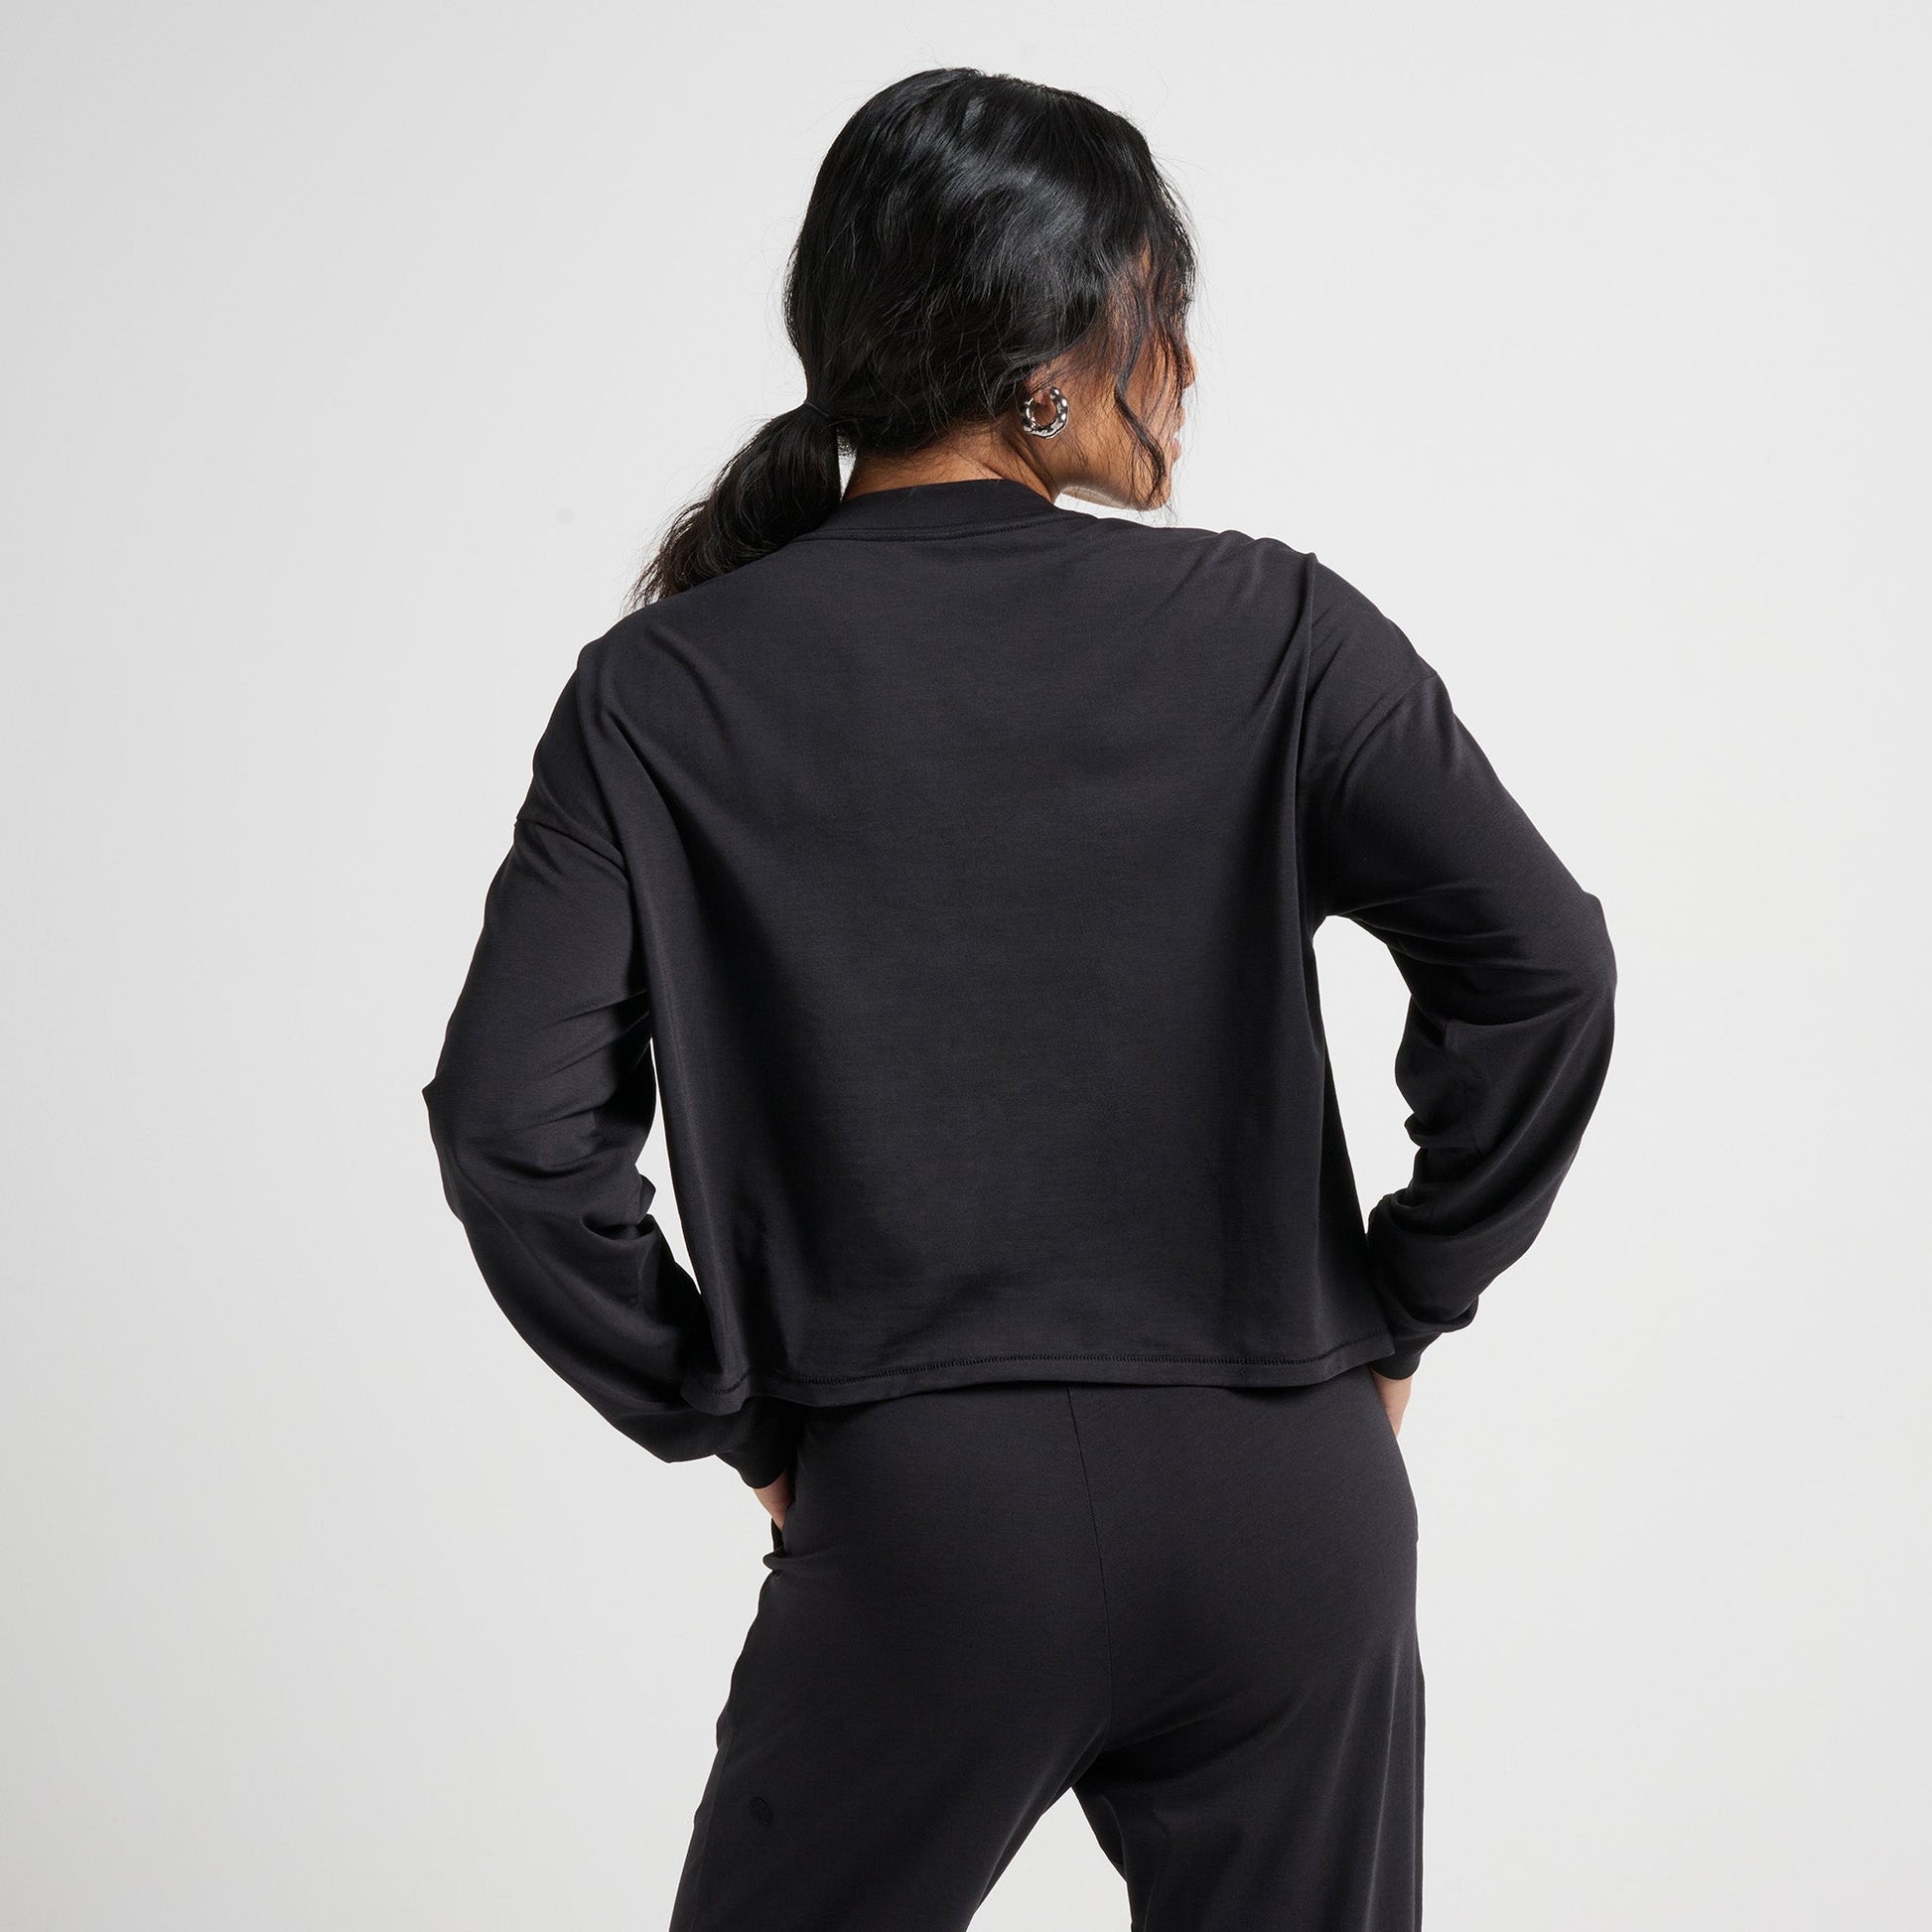 Stance Women's Lay Low Boxy Long Sleeve T-Shirt Black |model